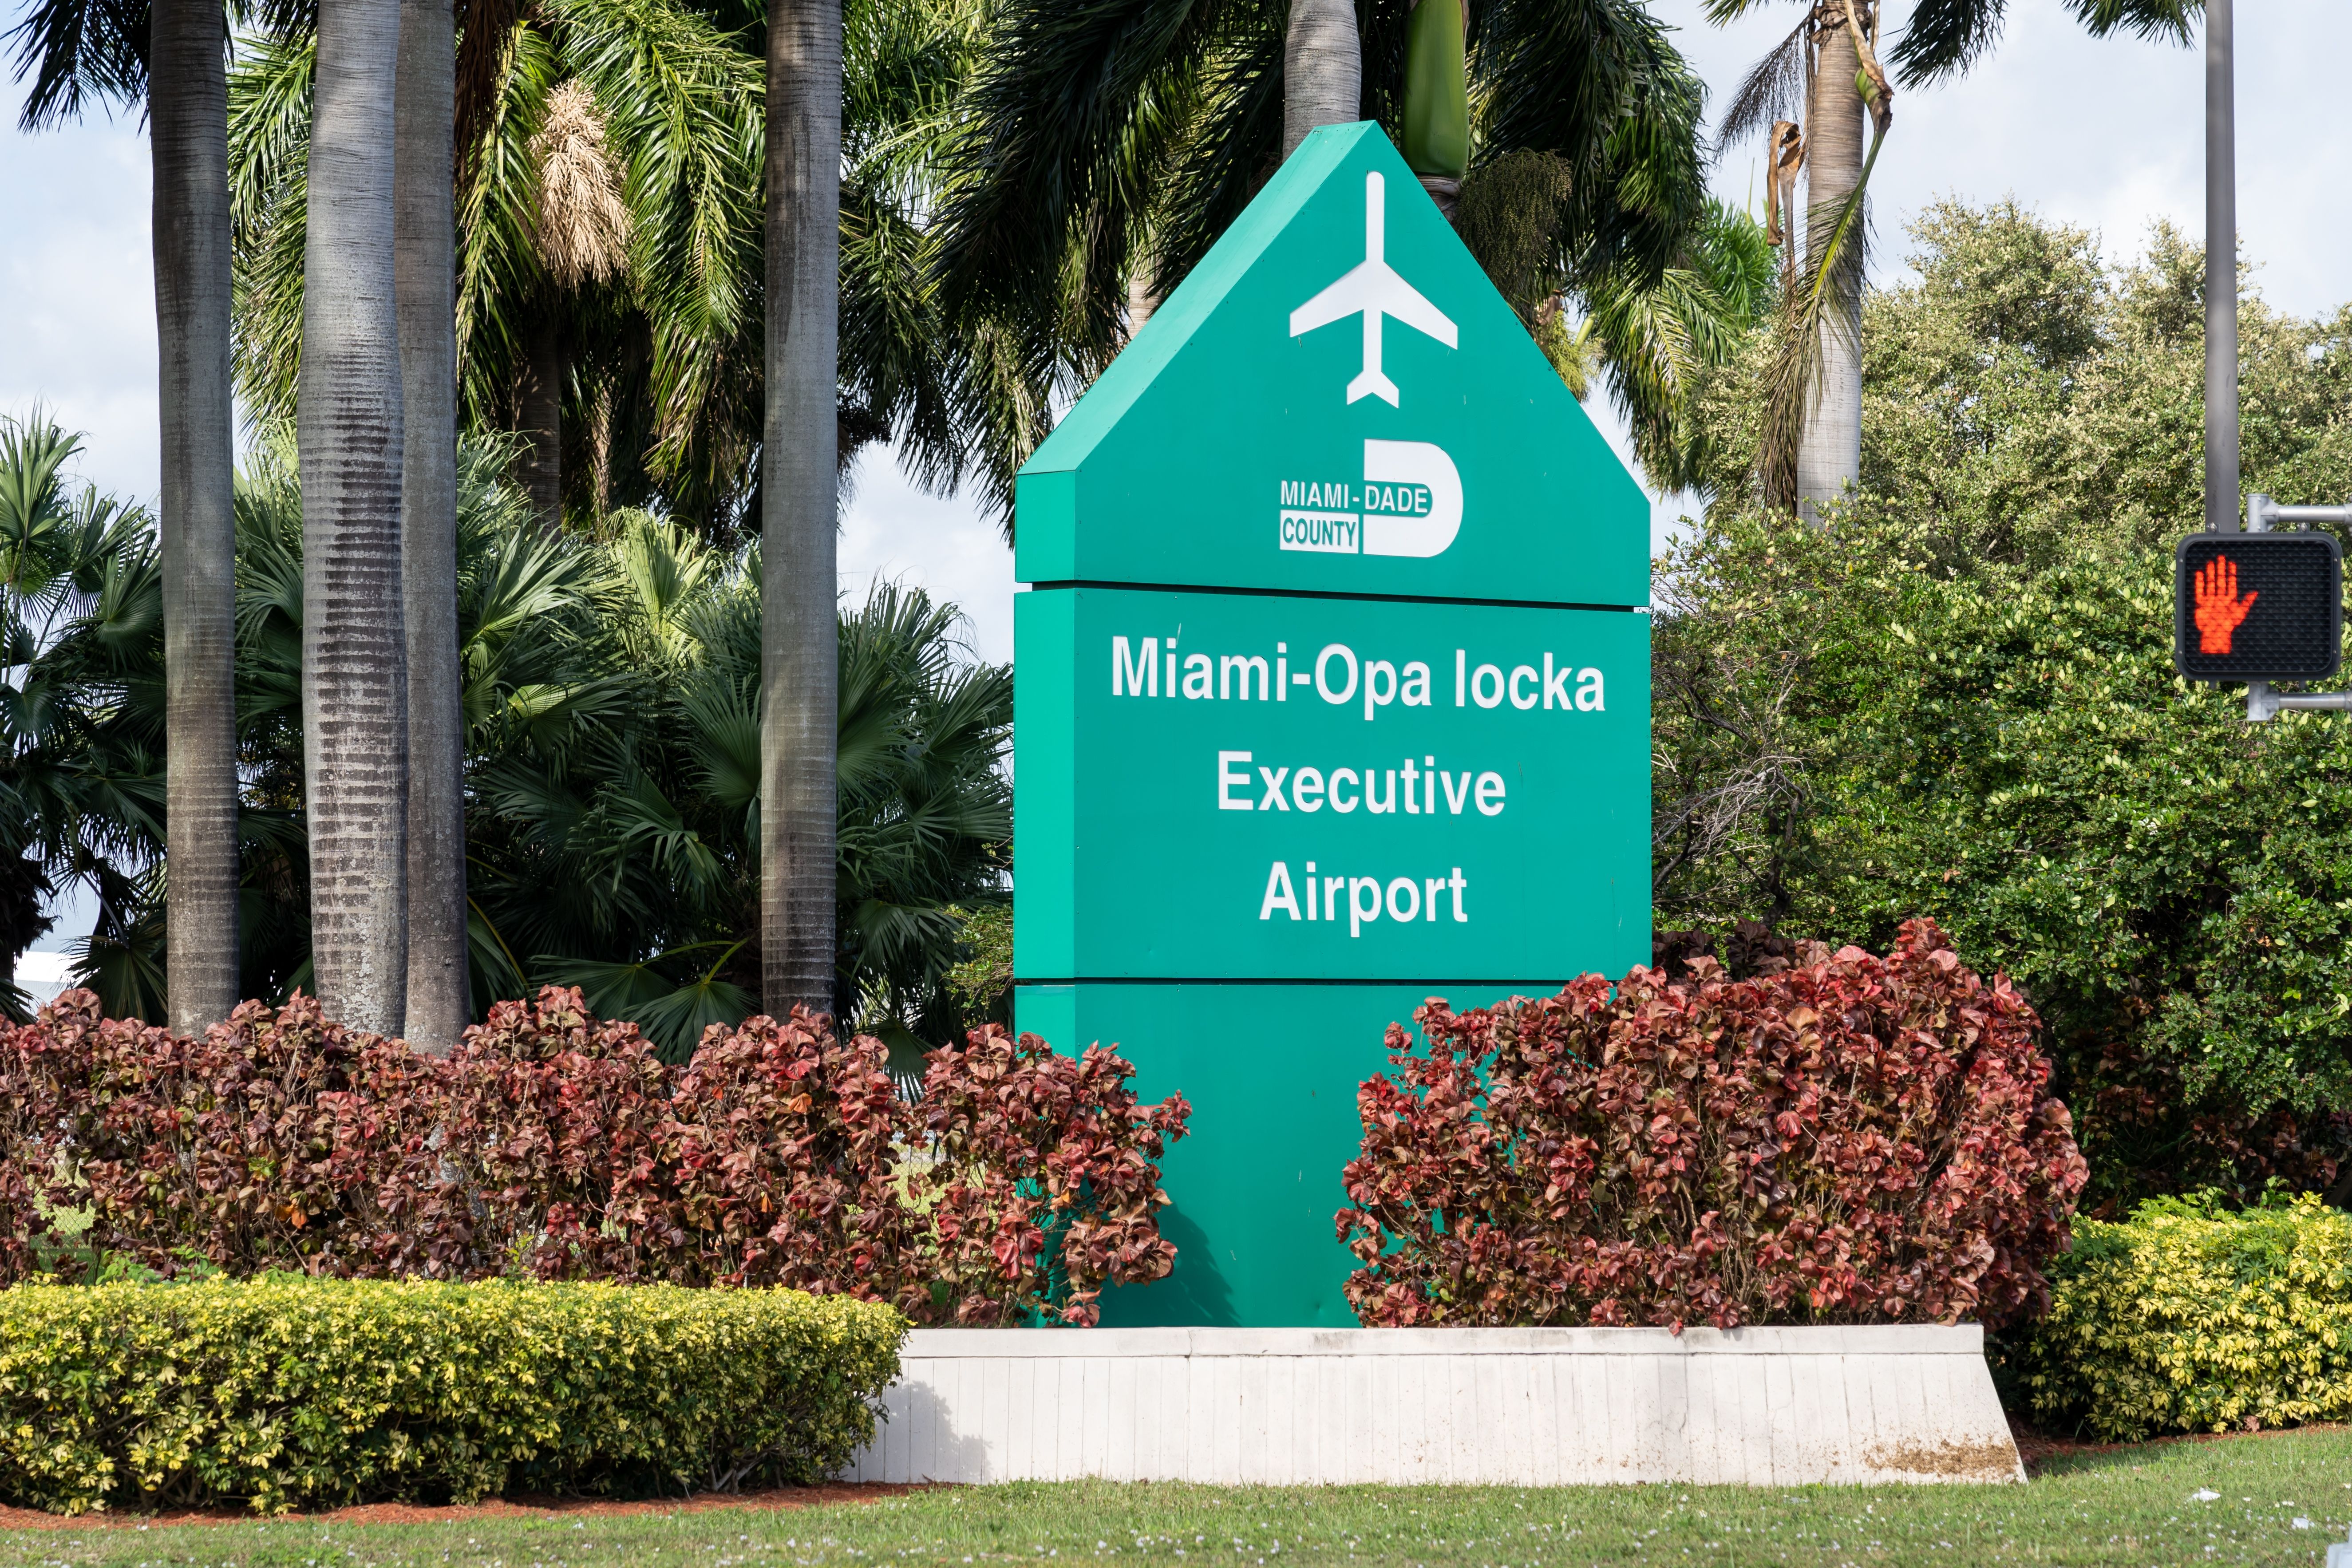 Miami-Opa locka Executive Airport